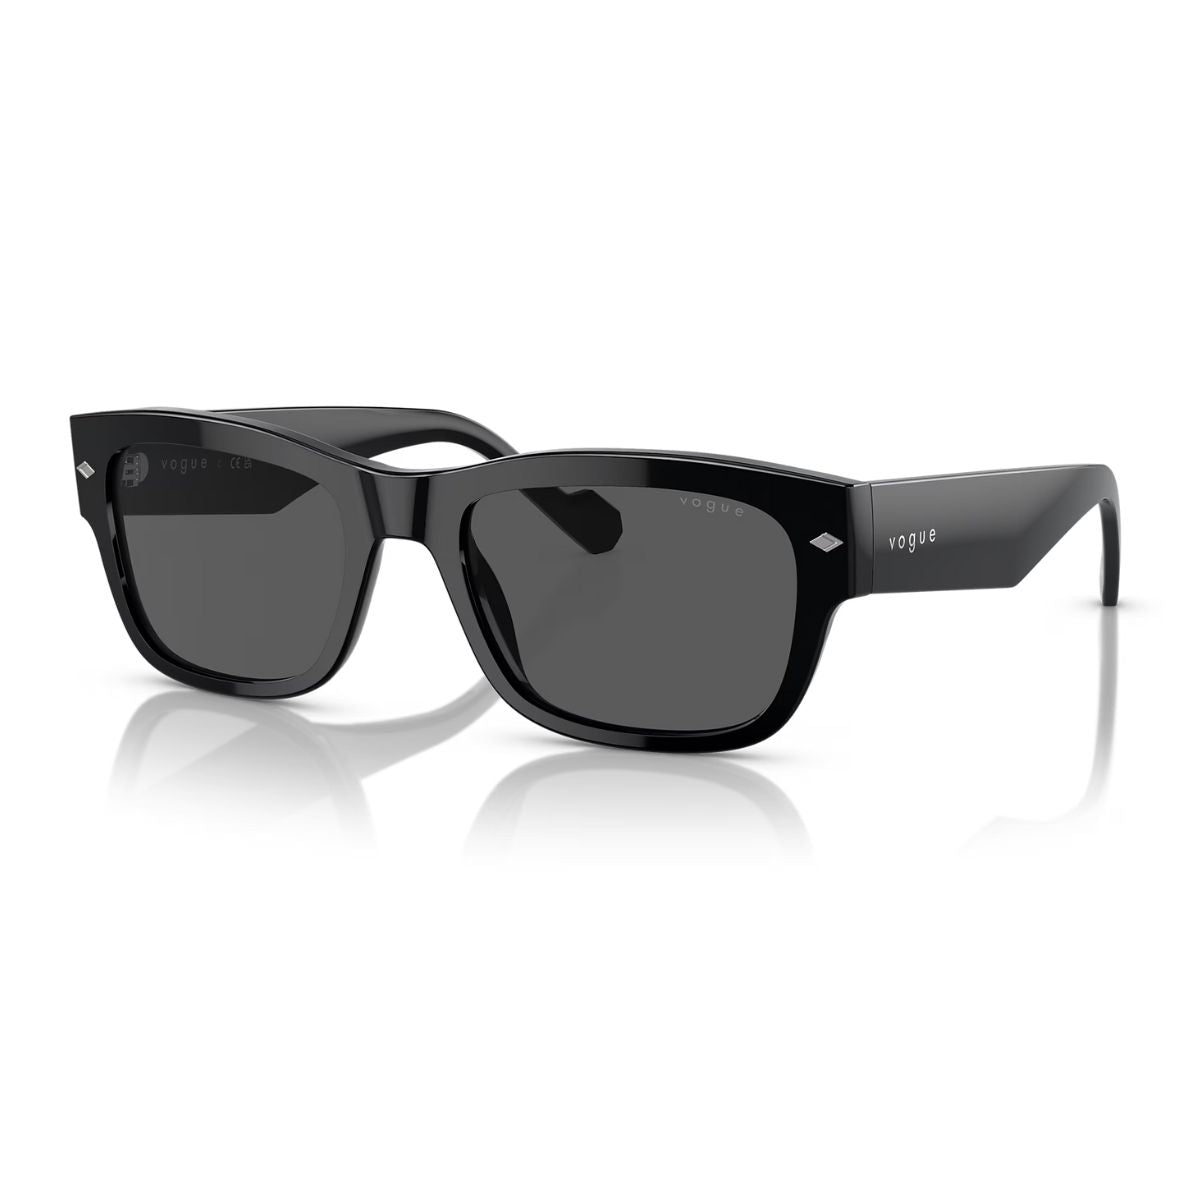 "Shop Stylish Black Color Rectangle Sunglasses For Women's At Optorium"